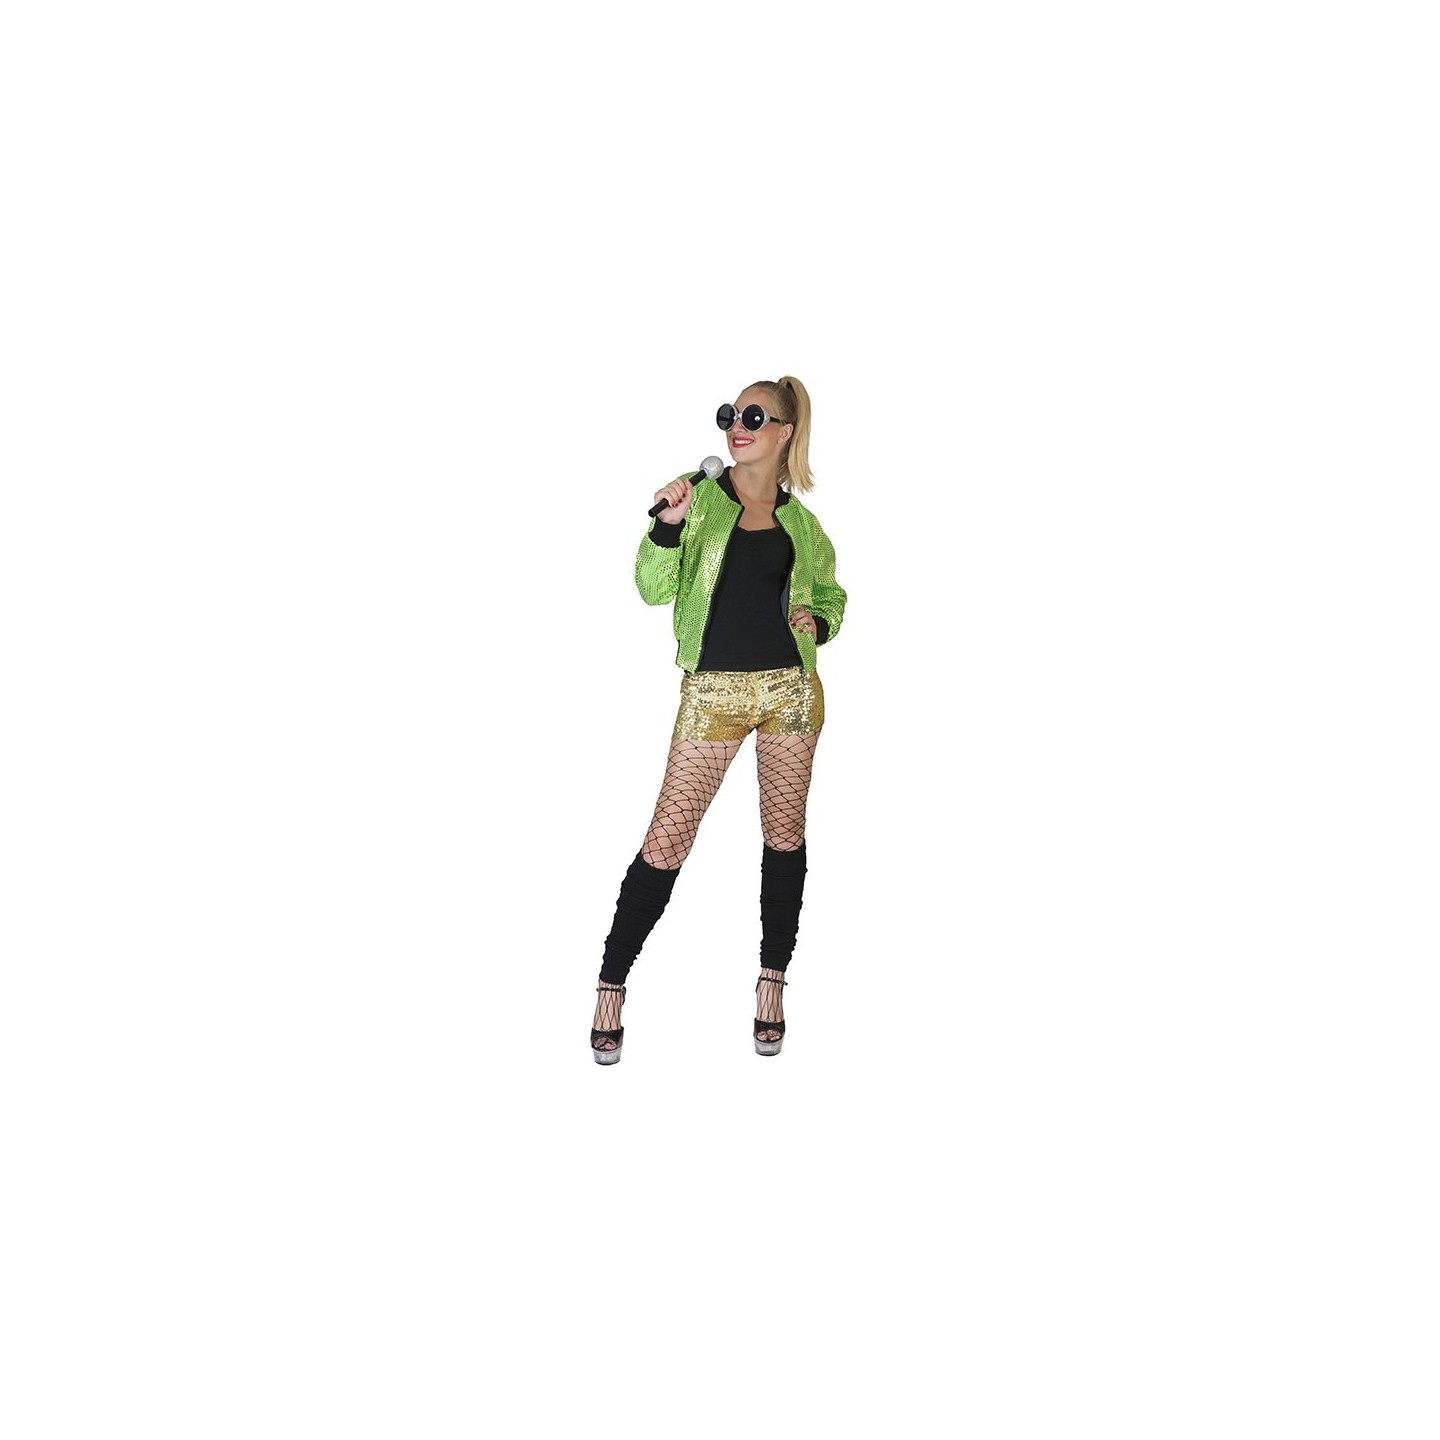 Glitter jasje groen Bomberjacket dames k3 jaren 90 kleding